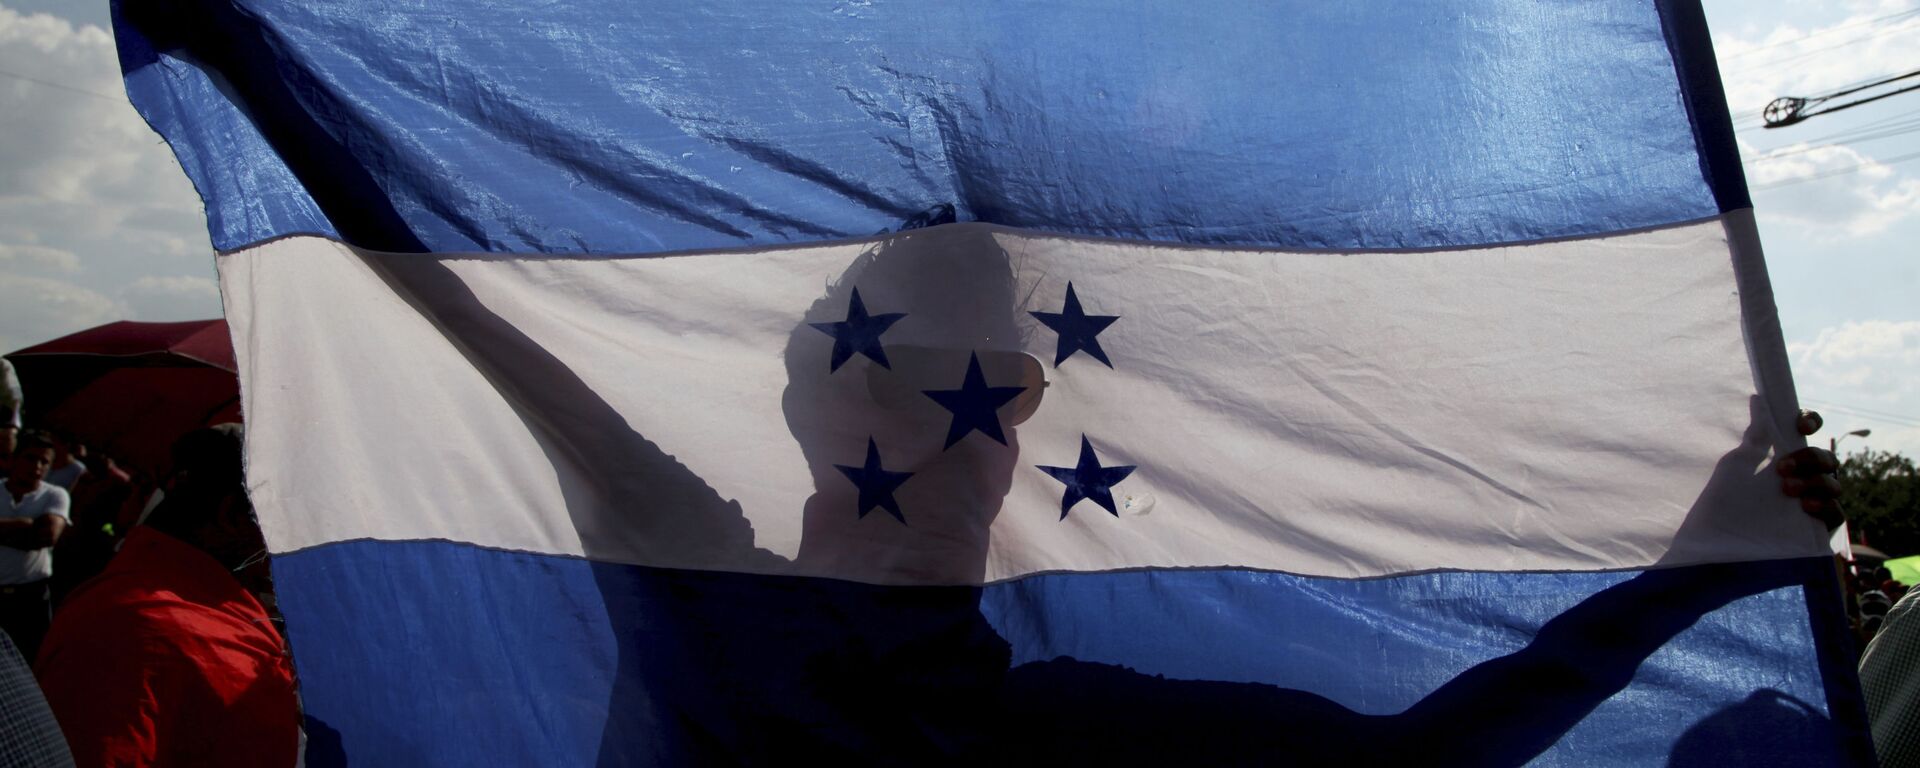 Bandera de Honduras - Sputnik Mundo, 1920, 21.11.2021